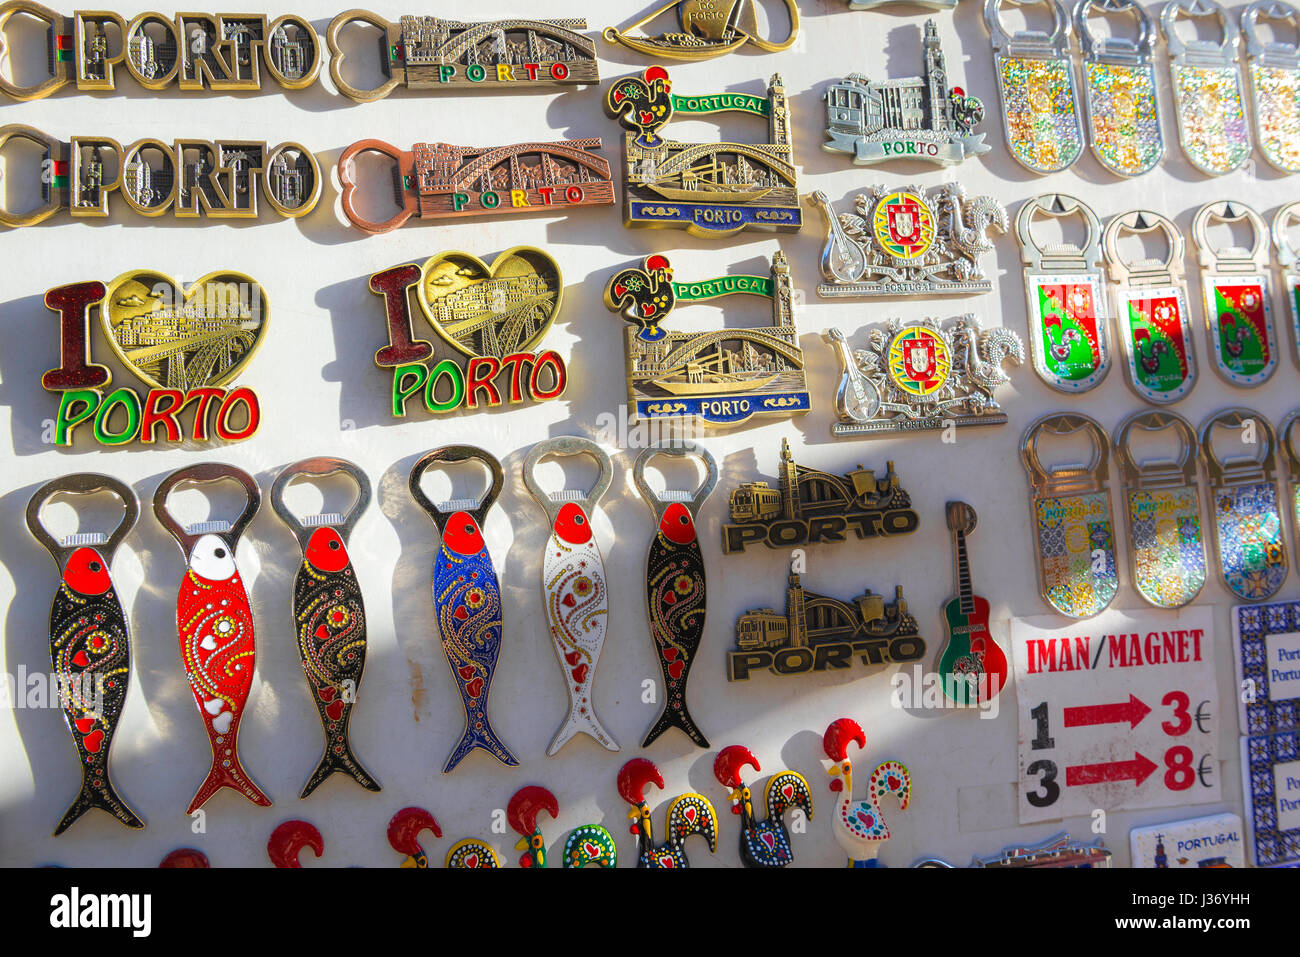 Portugal souvenir fotografías e imágenes de alta resolución - Alamy